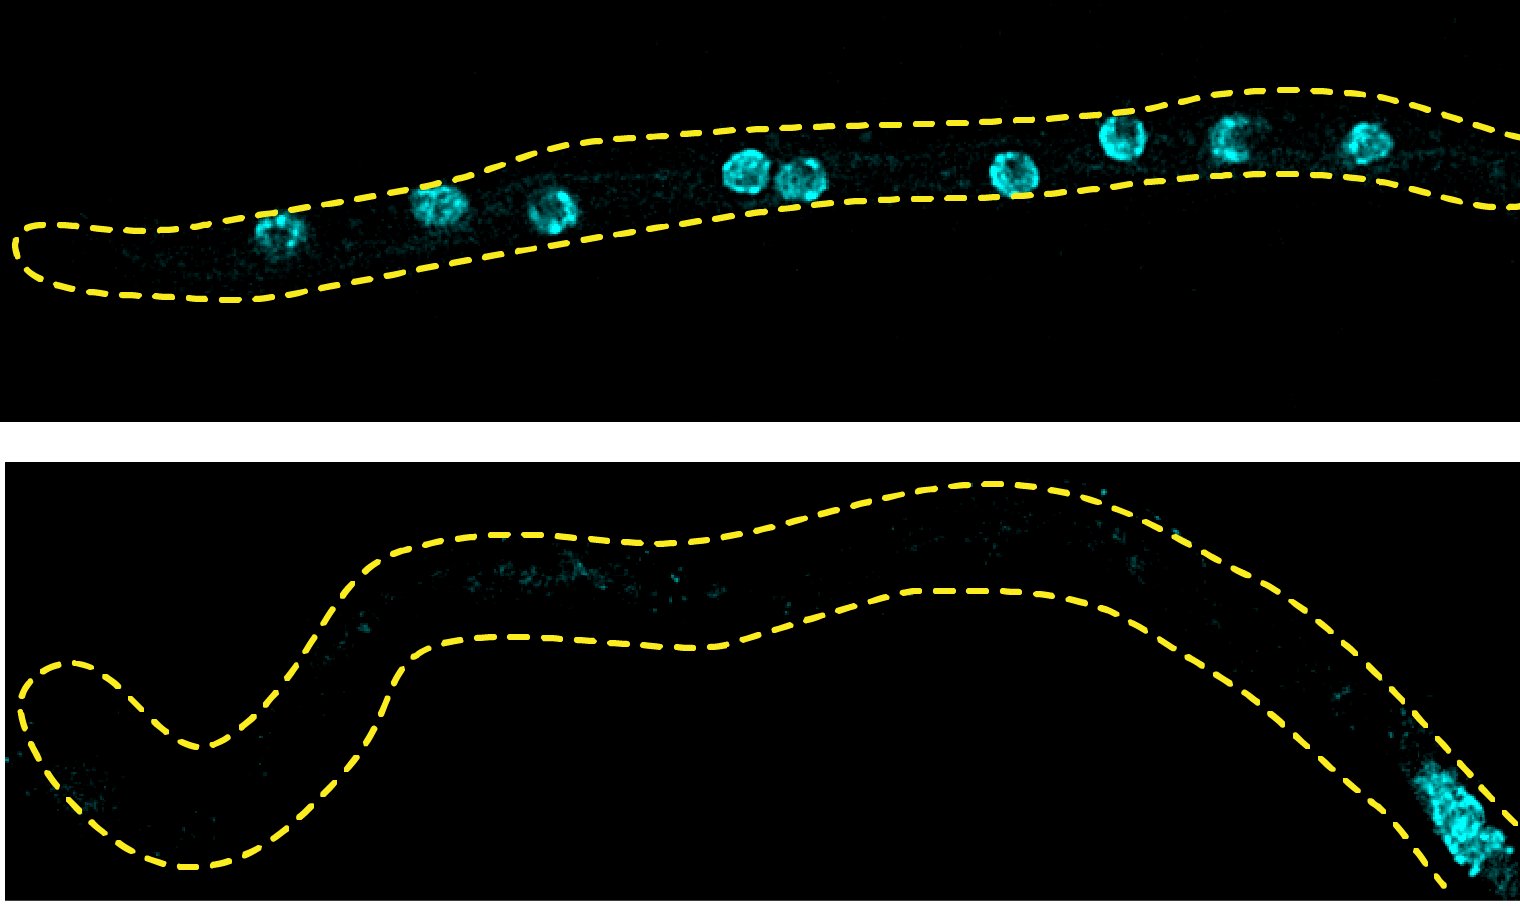 Illuminated image of intracellular transport